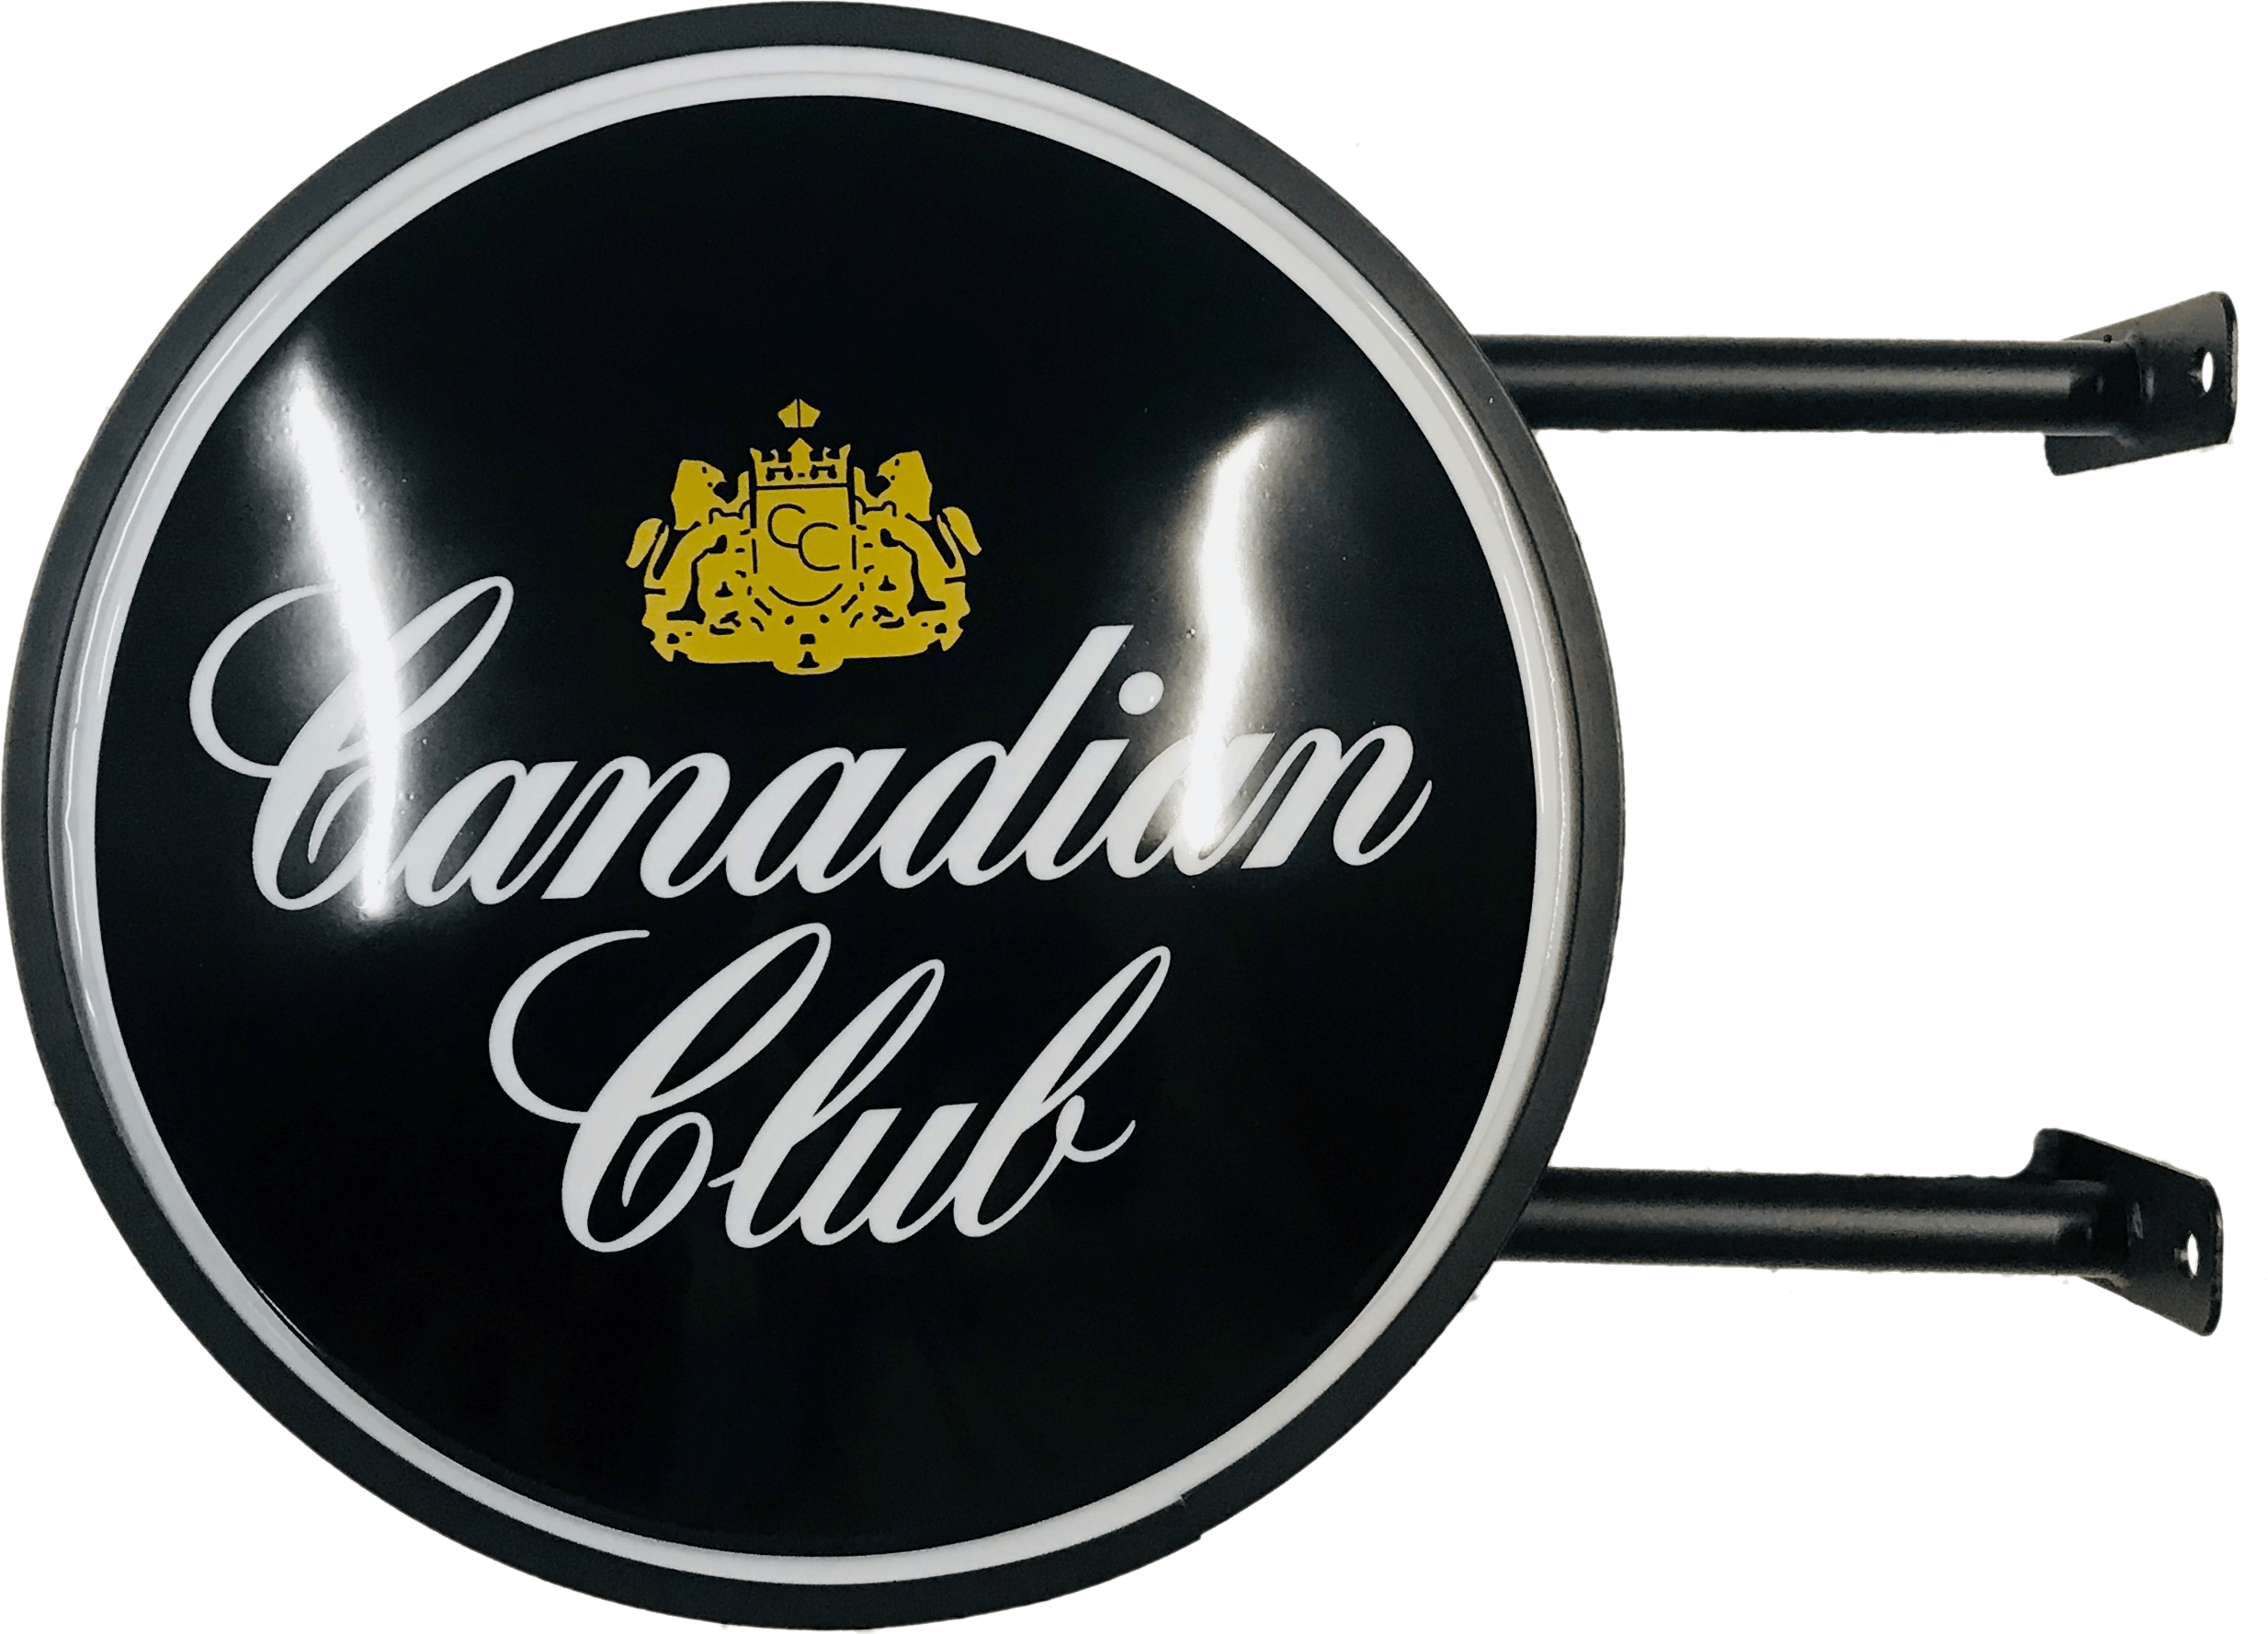 Canadian Club Spirits Bar Lighting Wall Sign Light LED